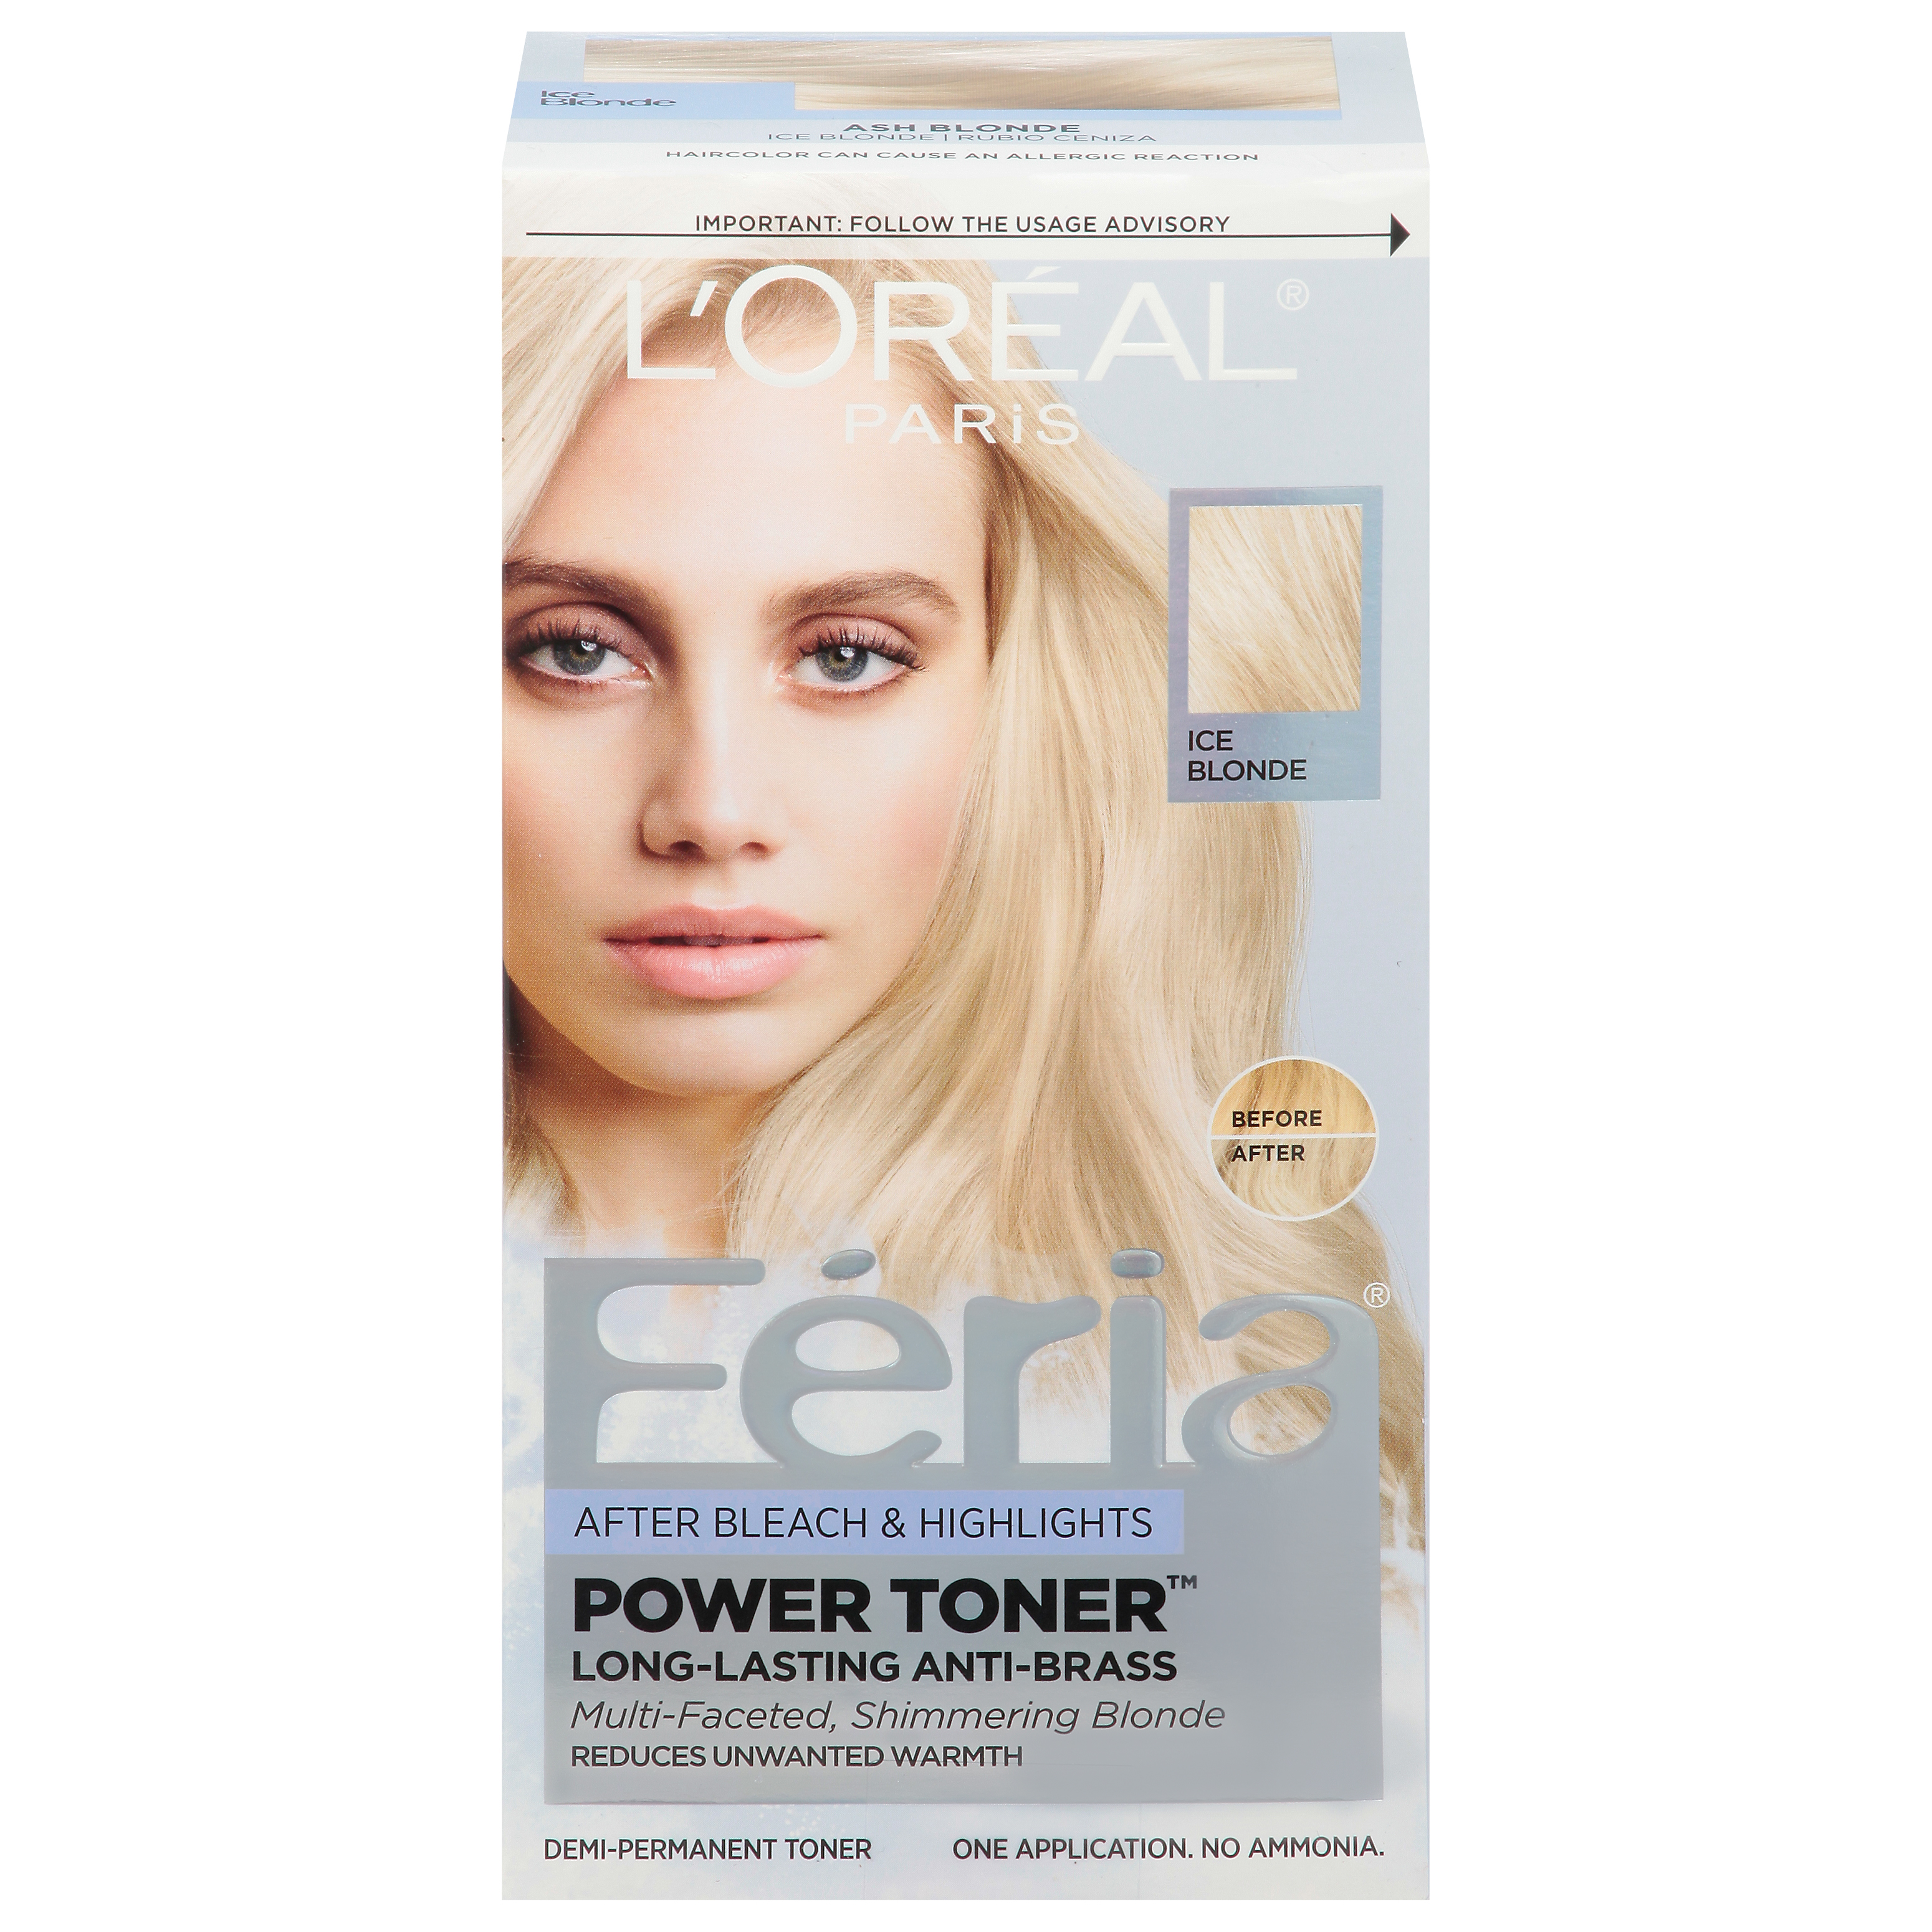 L'Oreal Feria Power Toner Demi Permanent Ice Blonde - 1 ct box | MARTIN'S